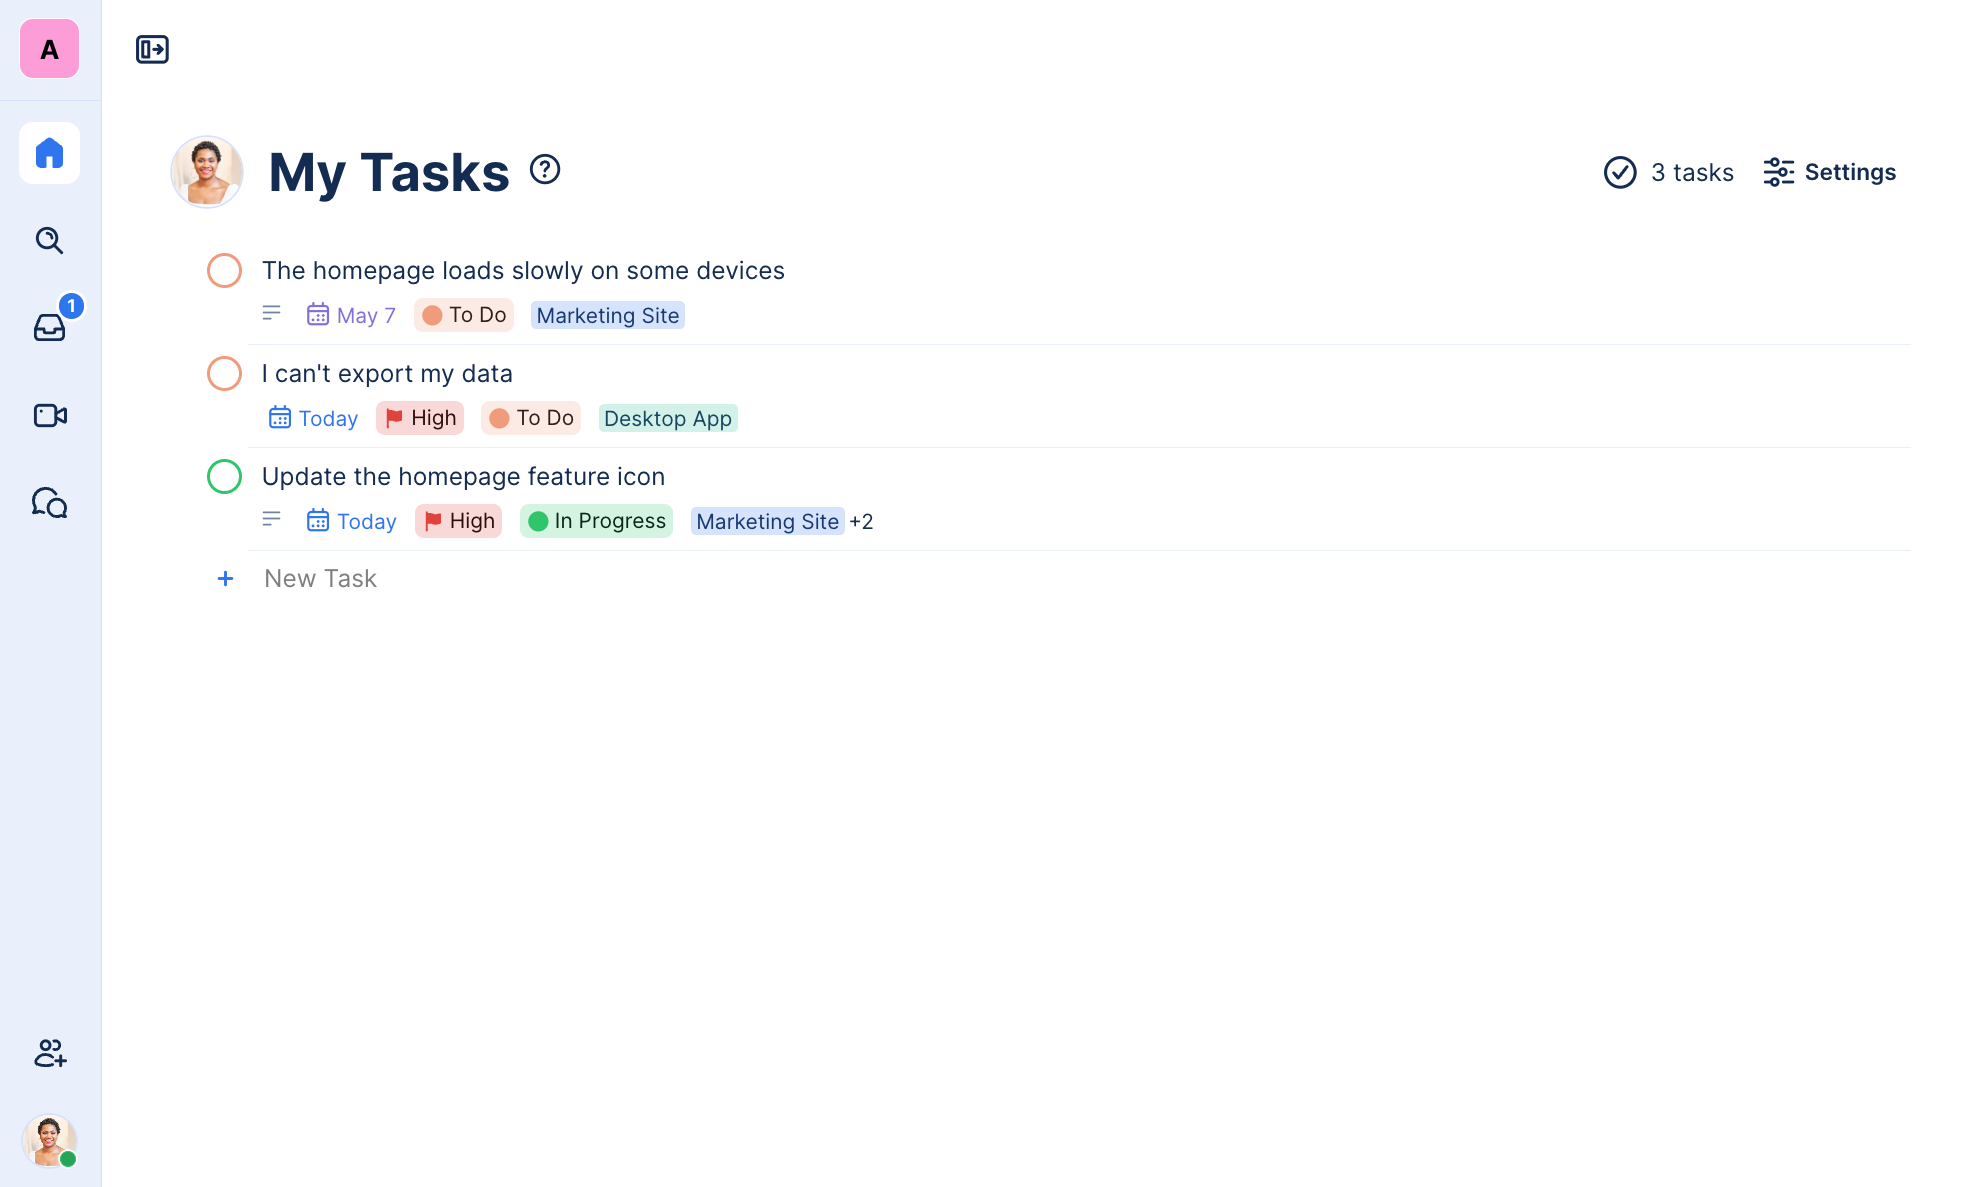 My Tasks view in TaskOrbiter, showing tasks assigned to you